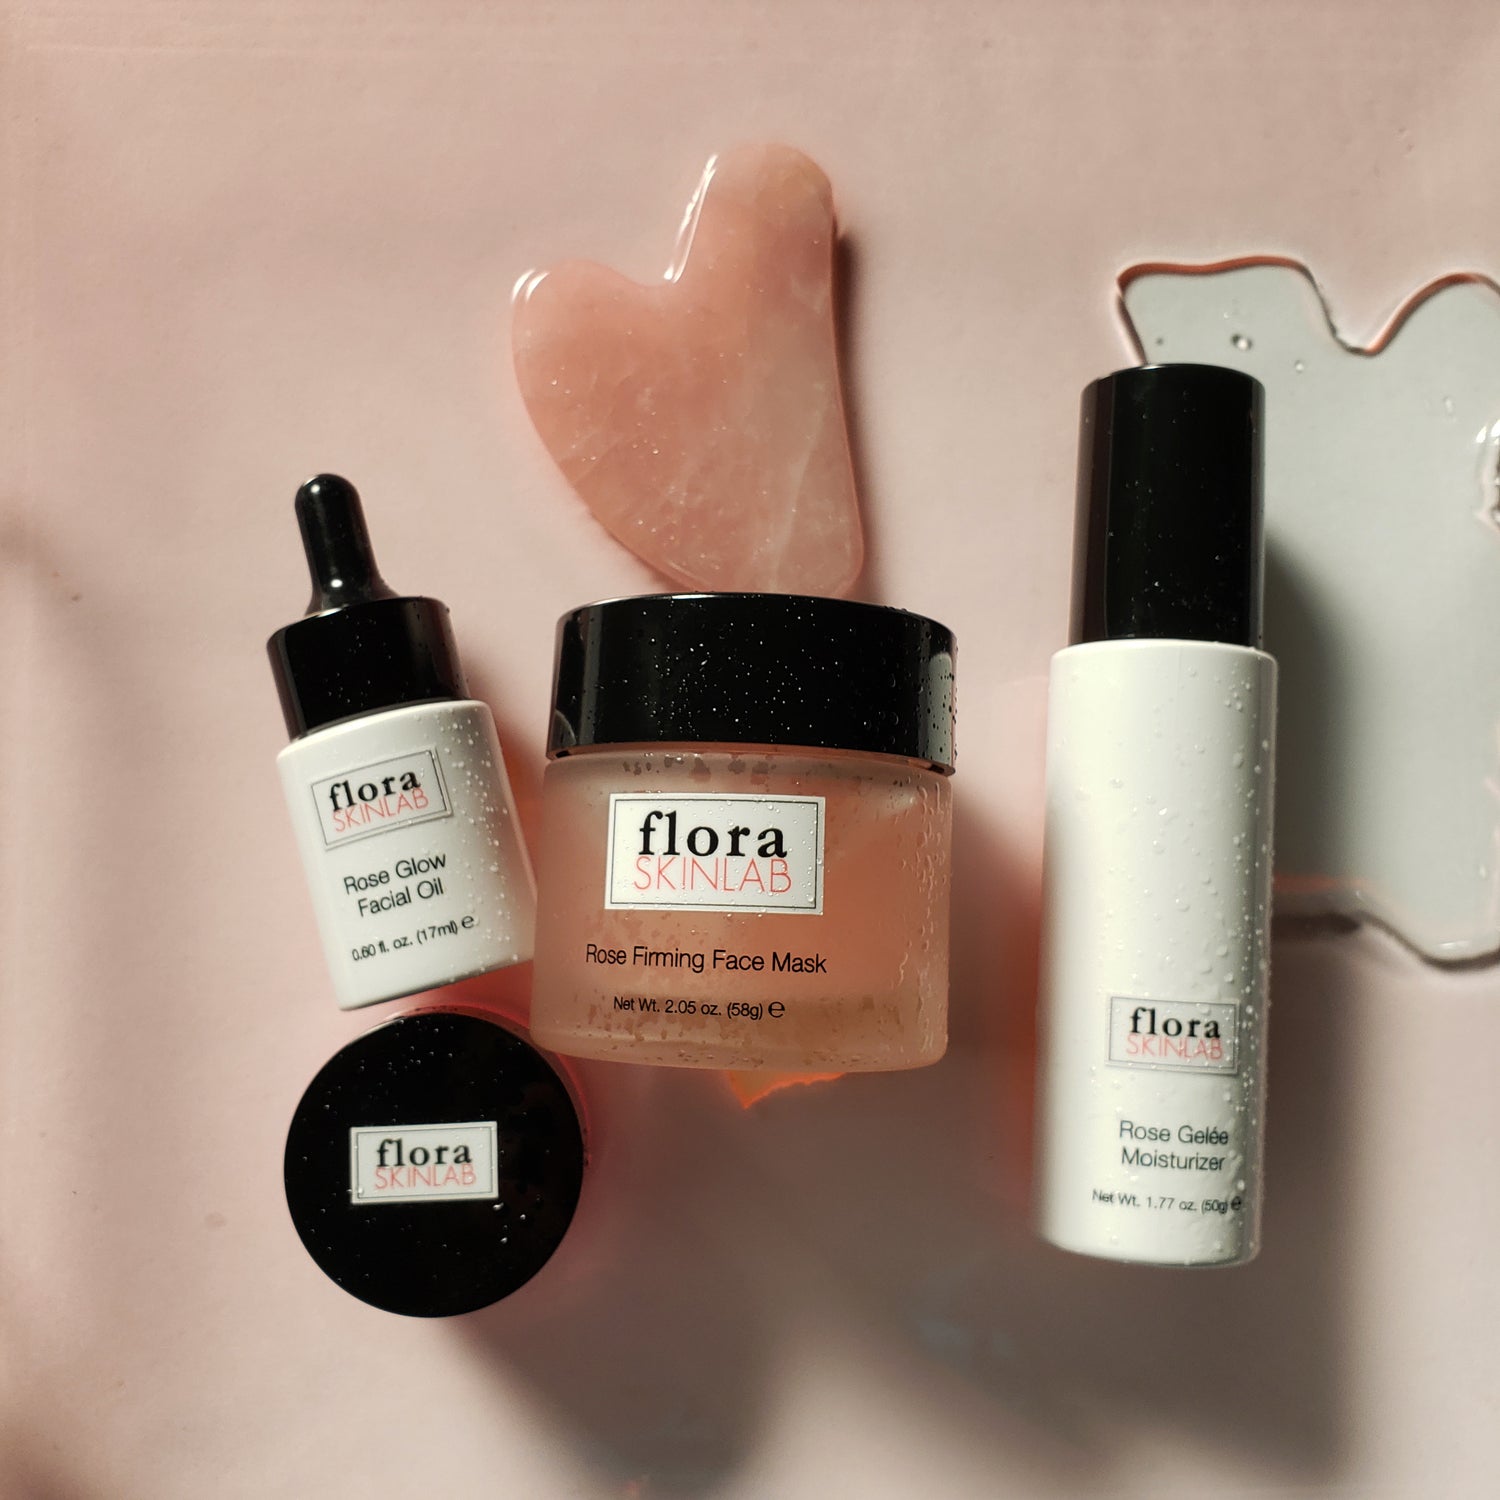 flora skinlab rose collection, rose quartz gua sha, rose glow facial oil, rose face mask, rose moisturizer.